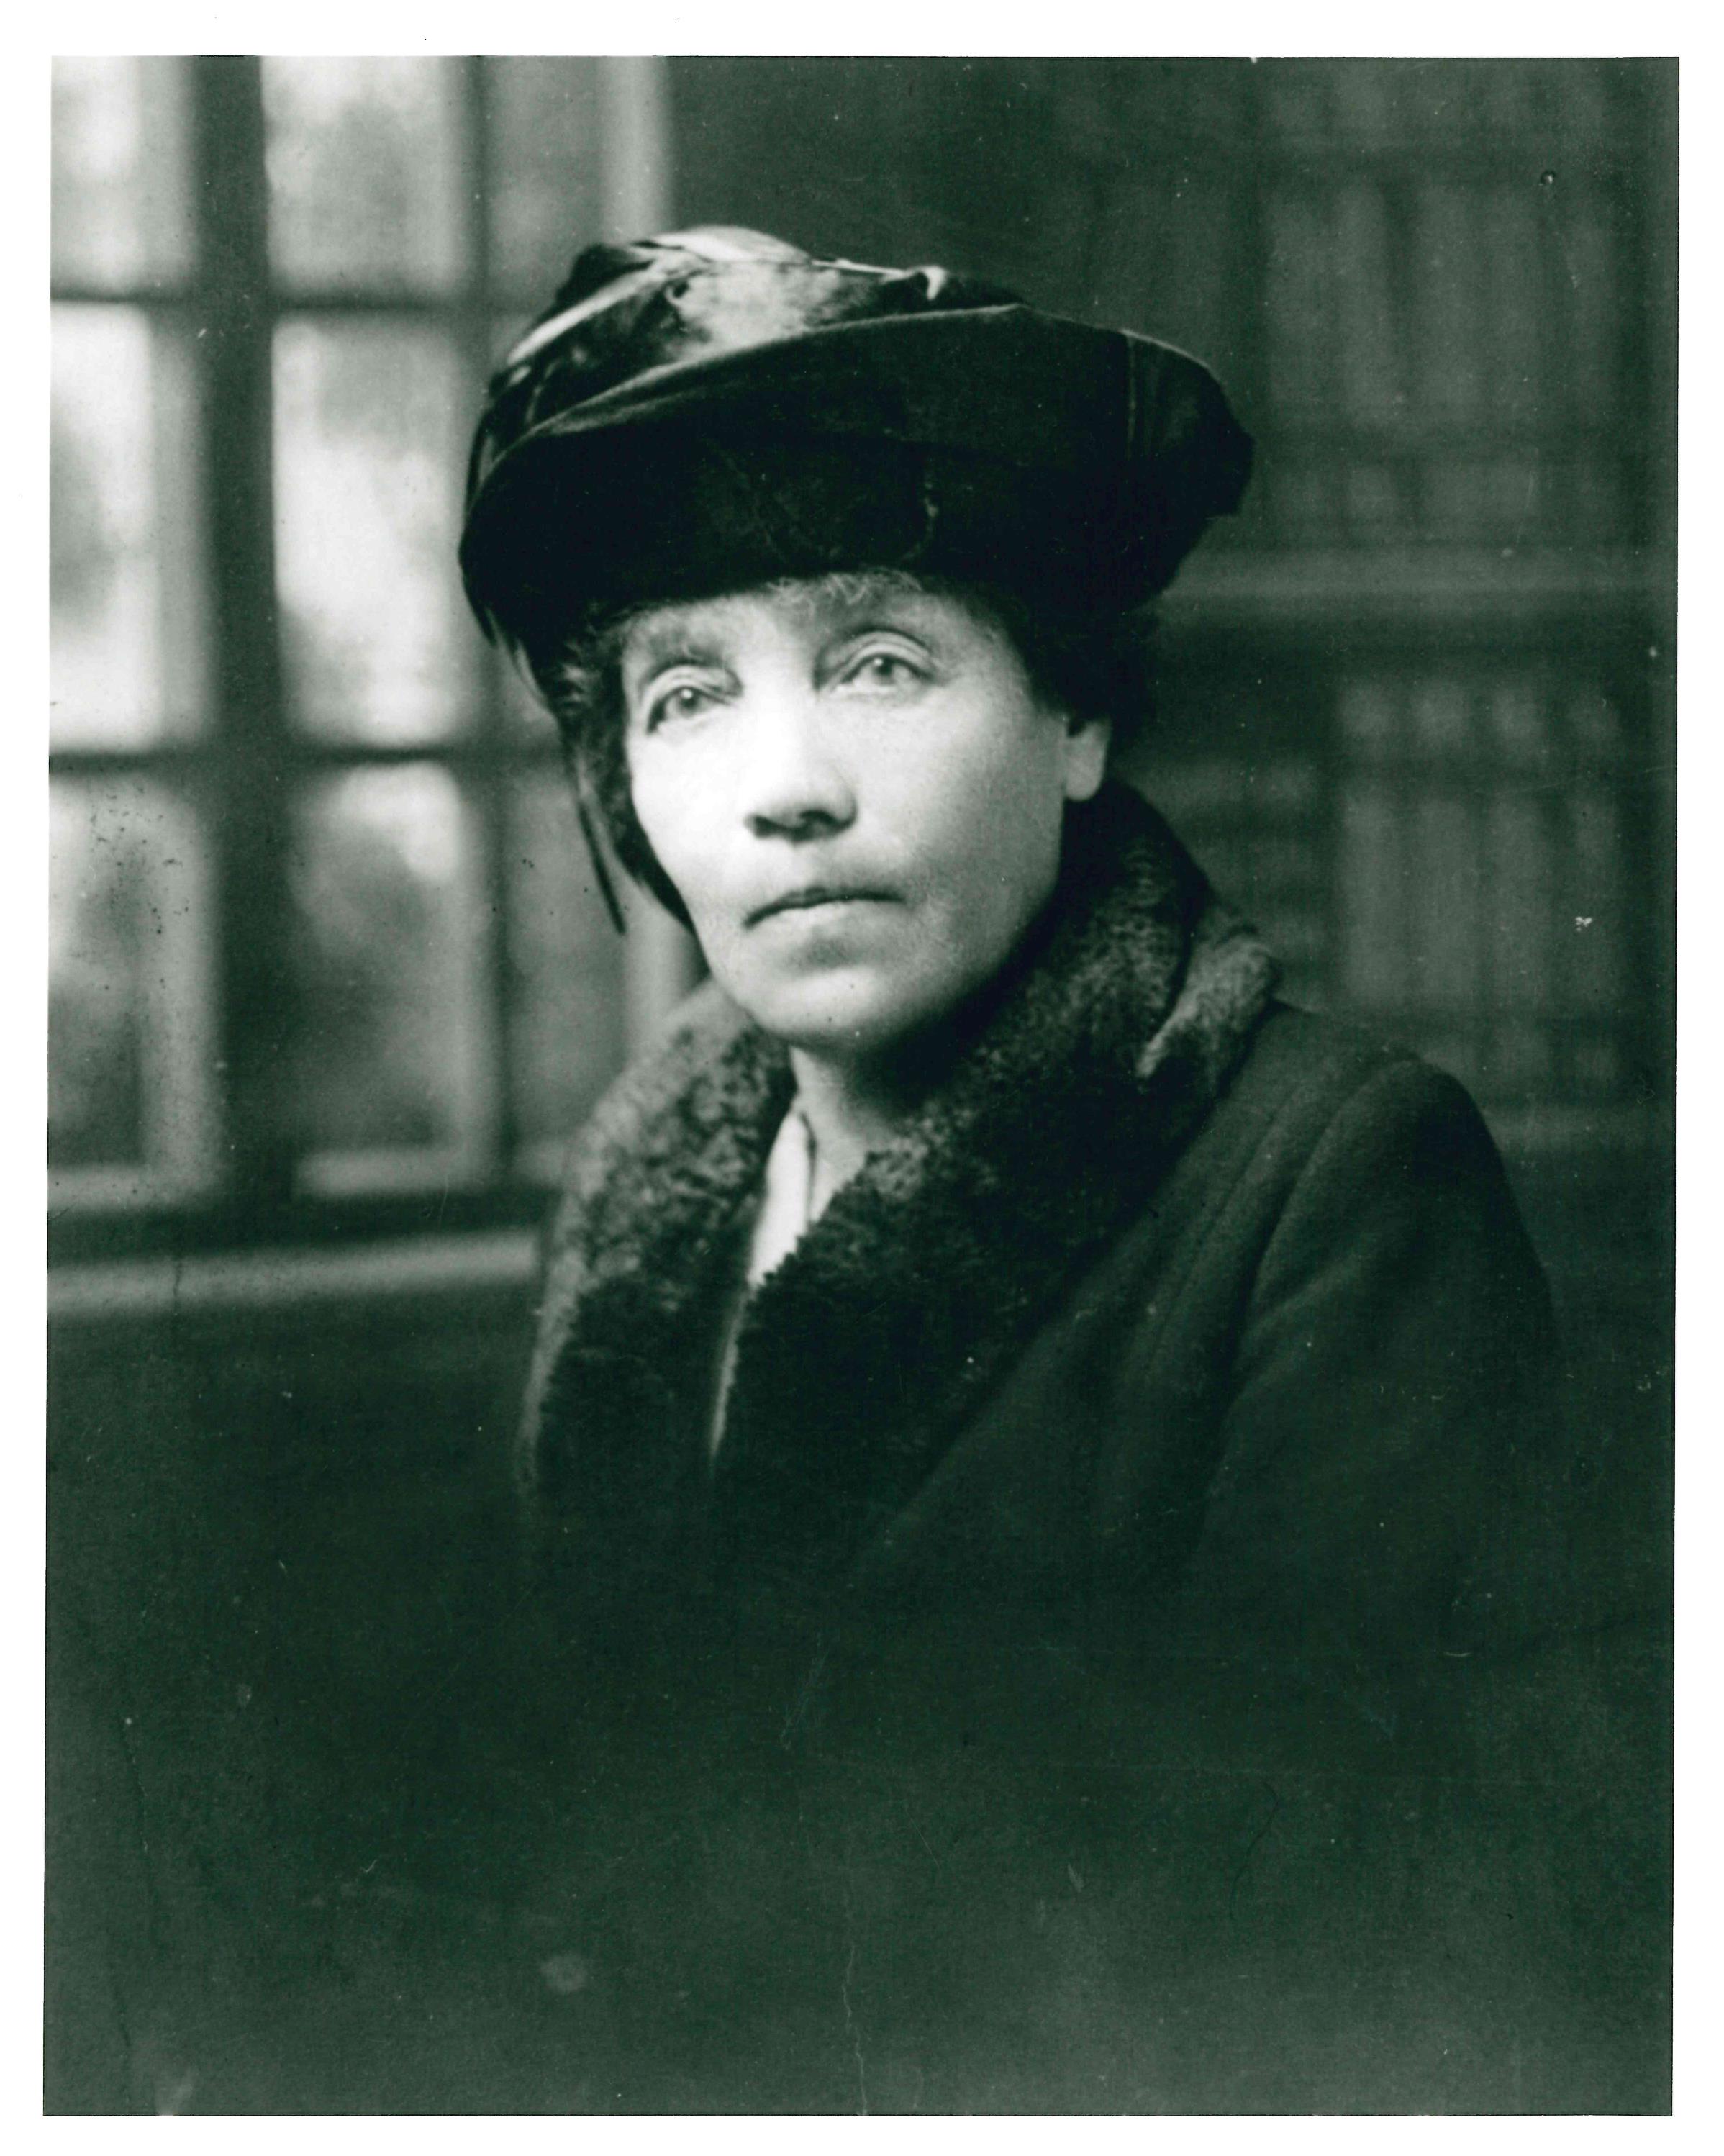 Image 3, Lady Belle Lougheed, c. 1910s